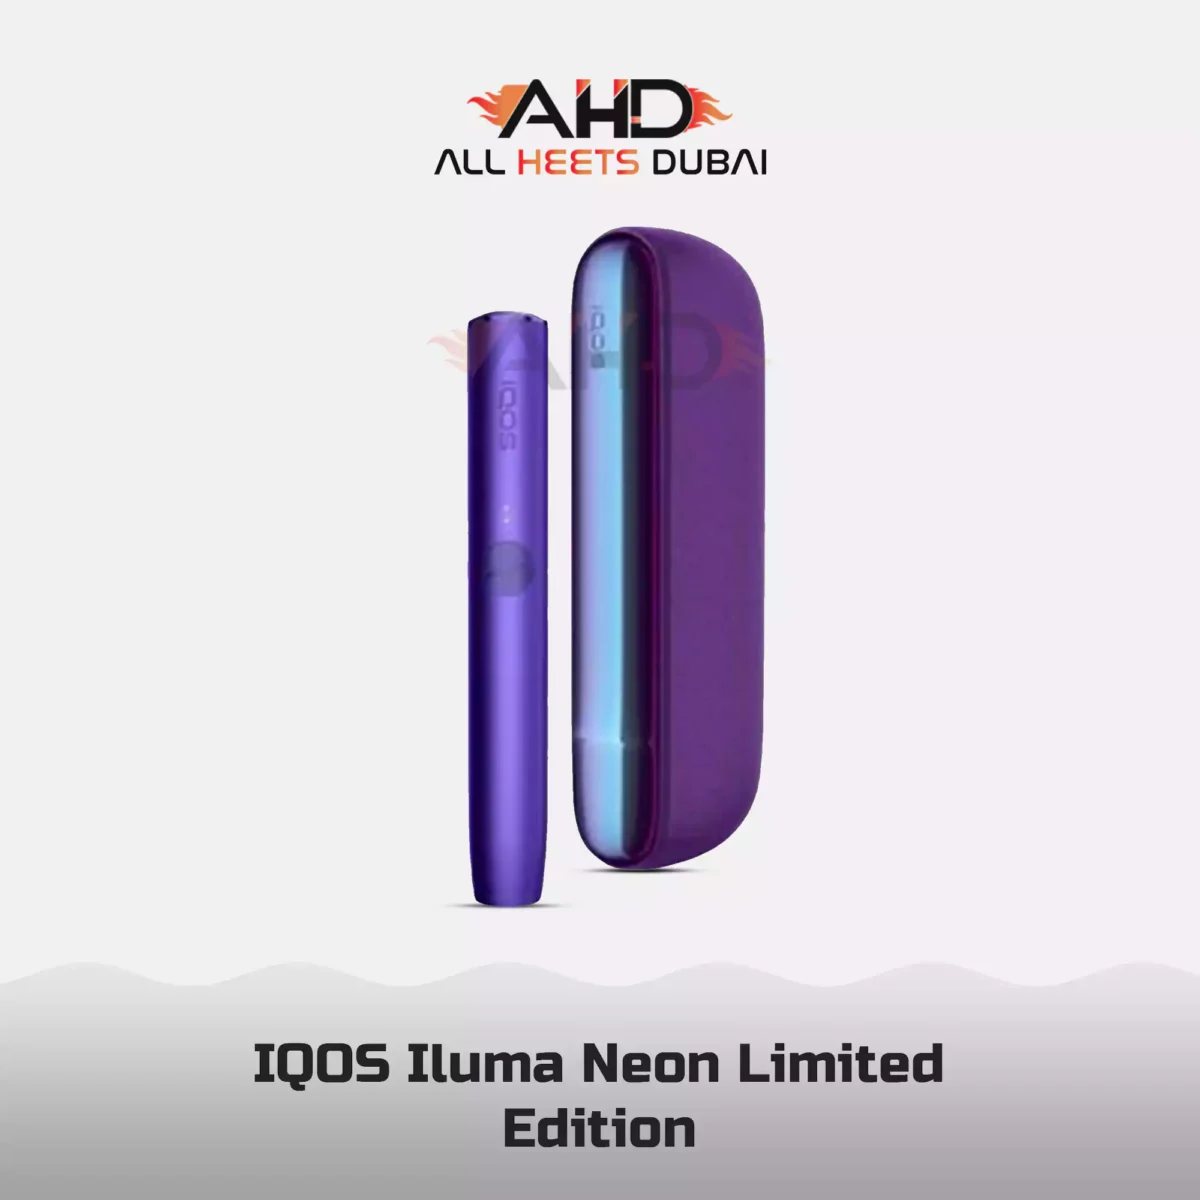 IQOS ILUMA Neon Limited Edition in Dubai ,ajman,sharjah,abu dhabi in UAE